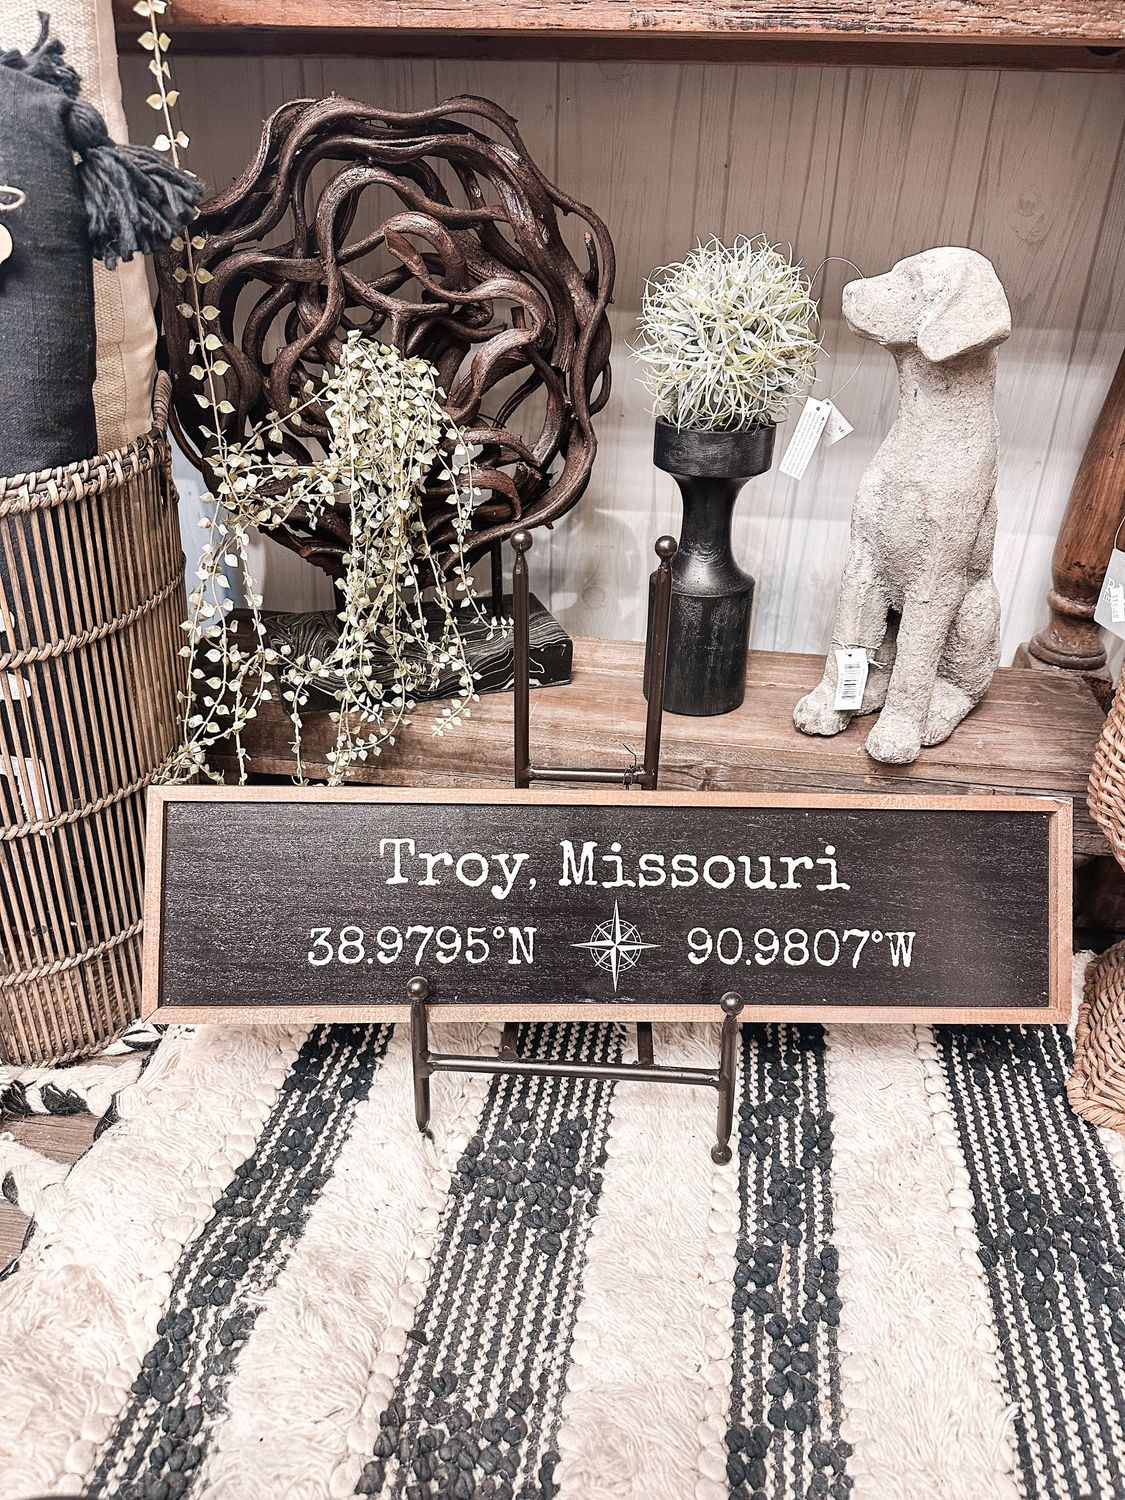 Troy, Missouri Location Sign